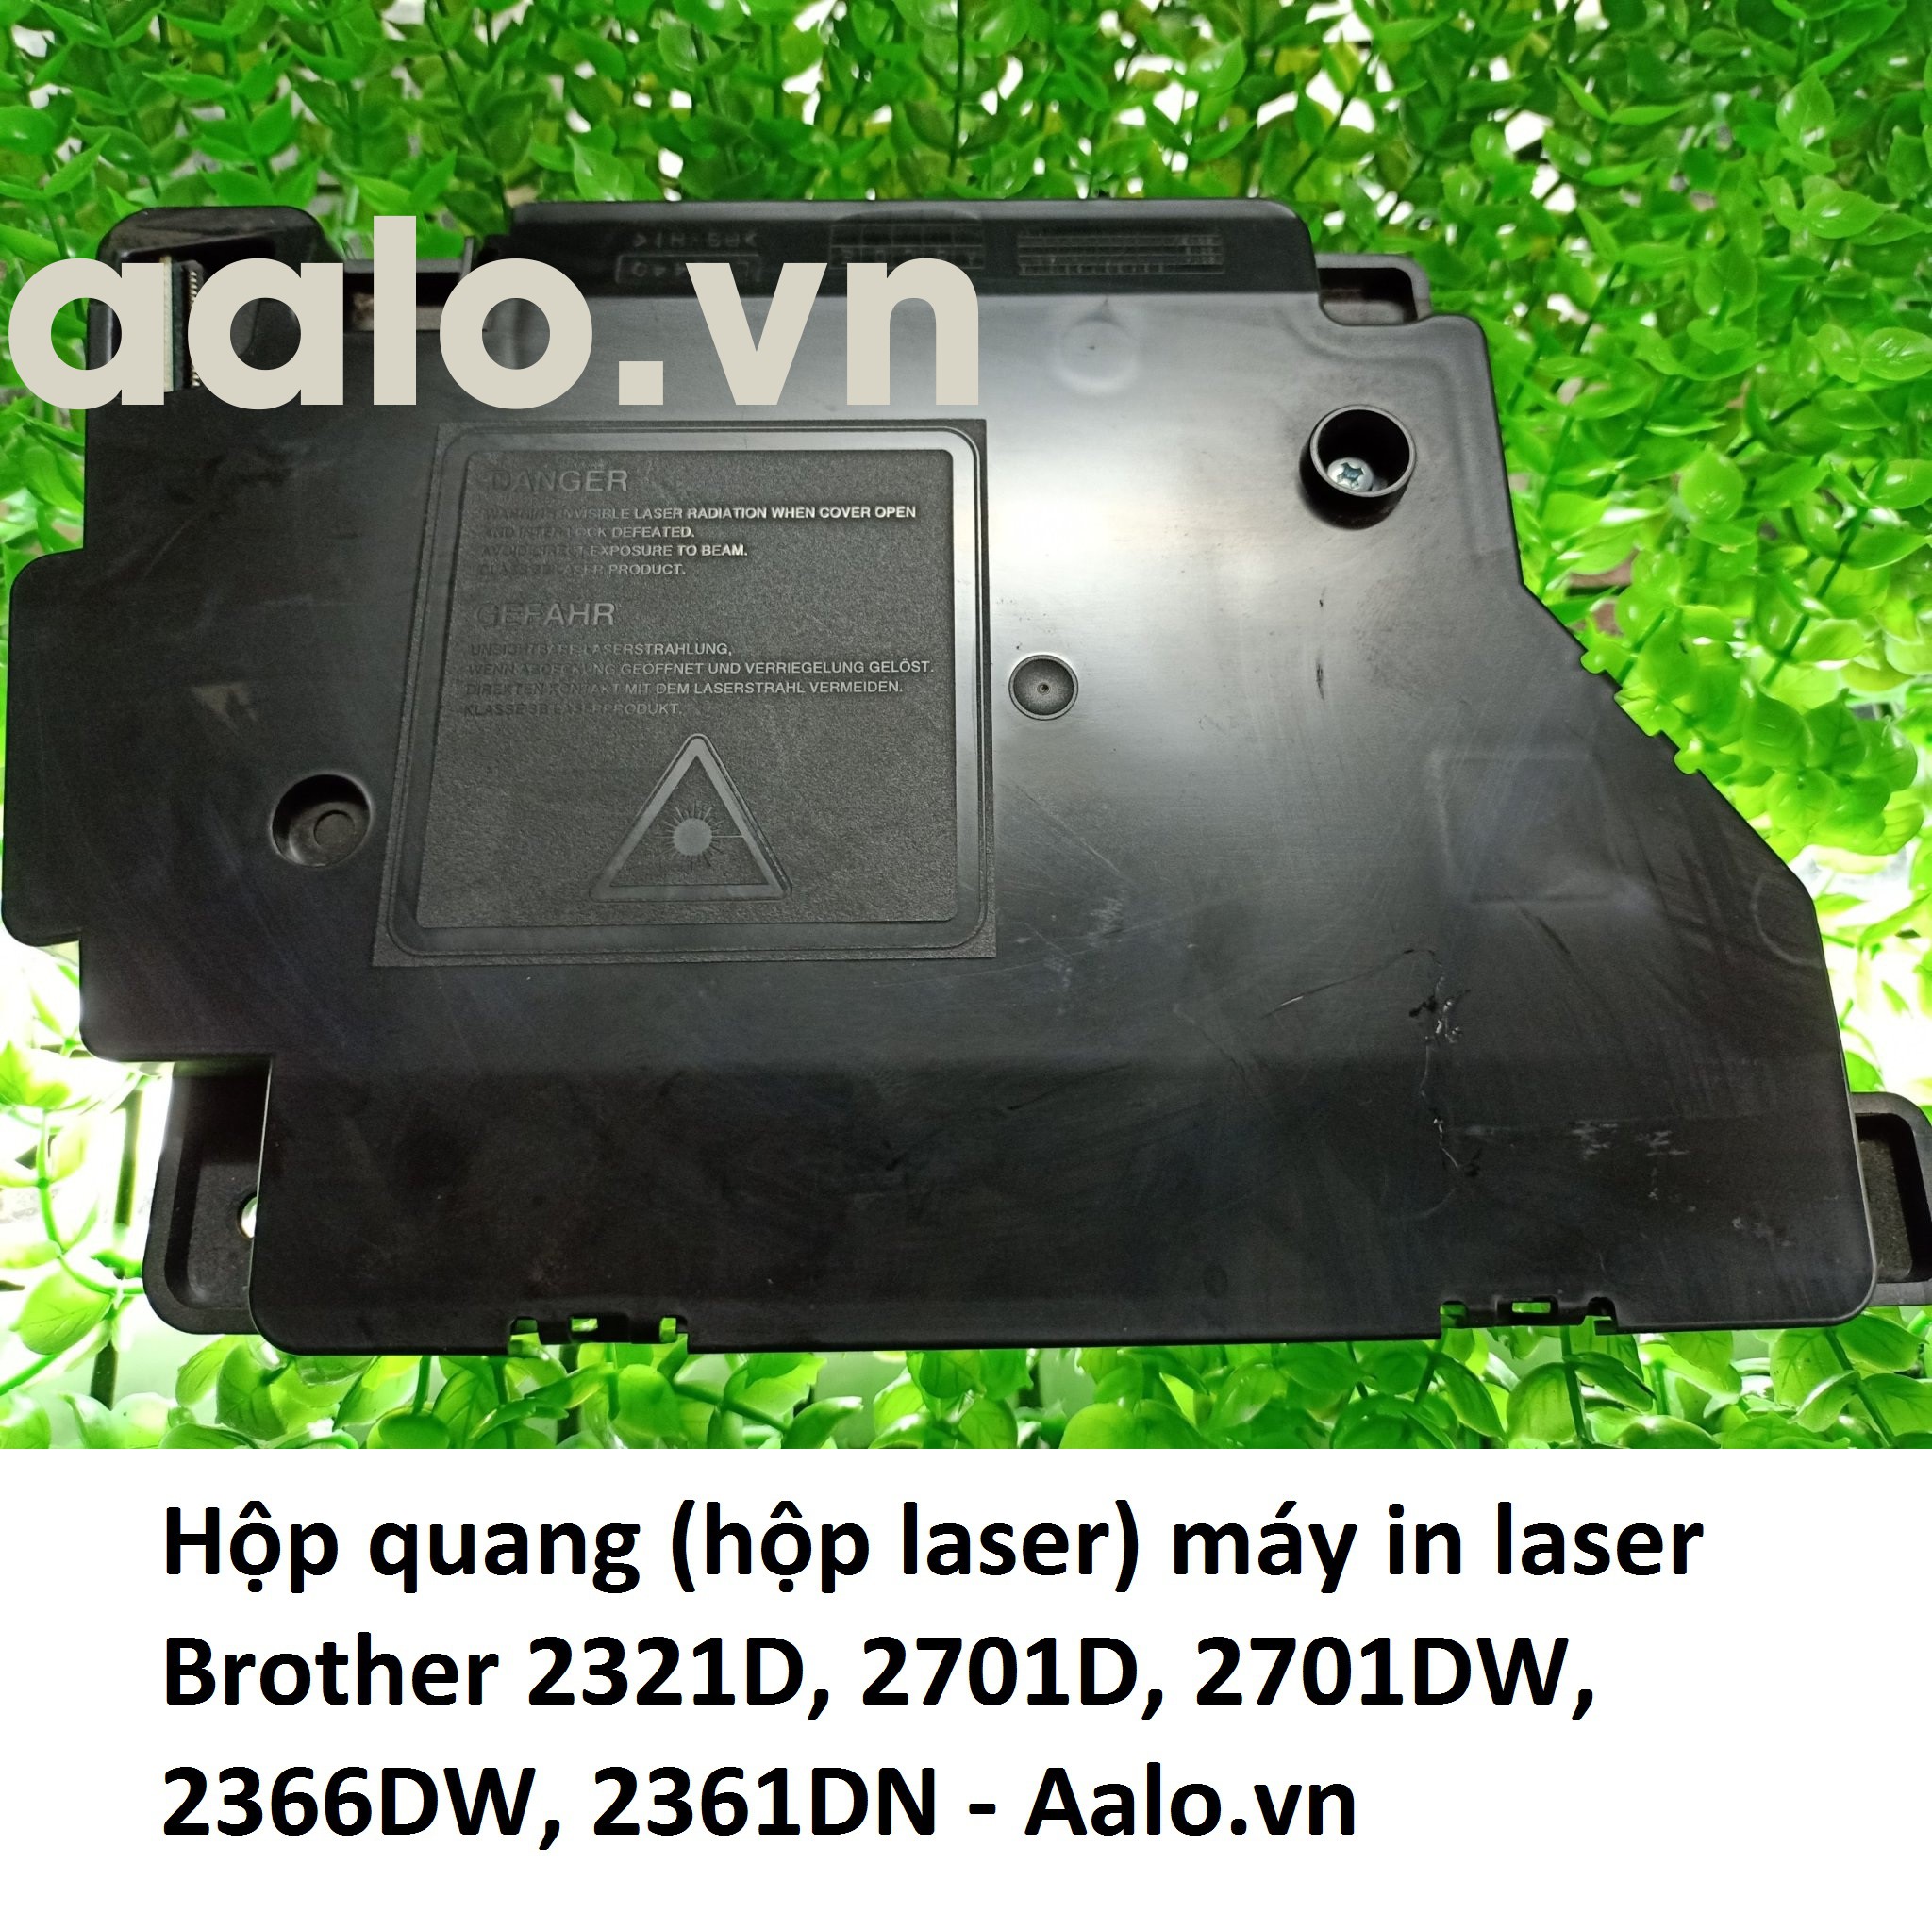 Hộp quang (hộp laser) máy in laser Brother 2321D, 2701D, 2701DW, 2366DW, 2361DN